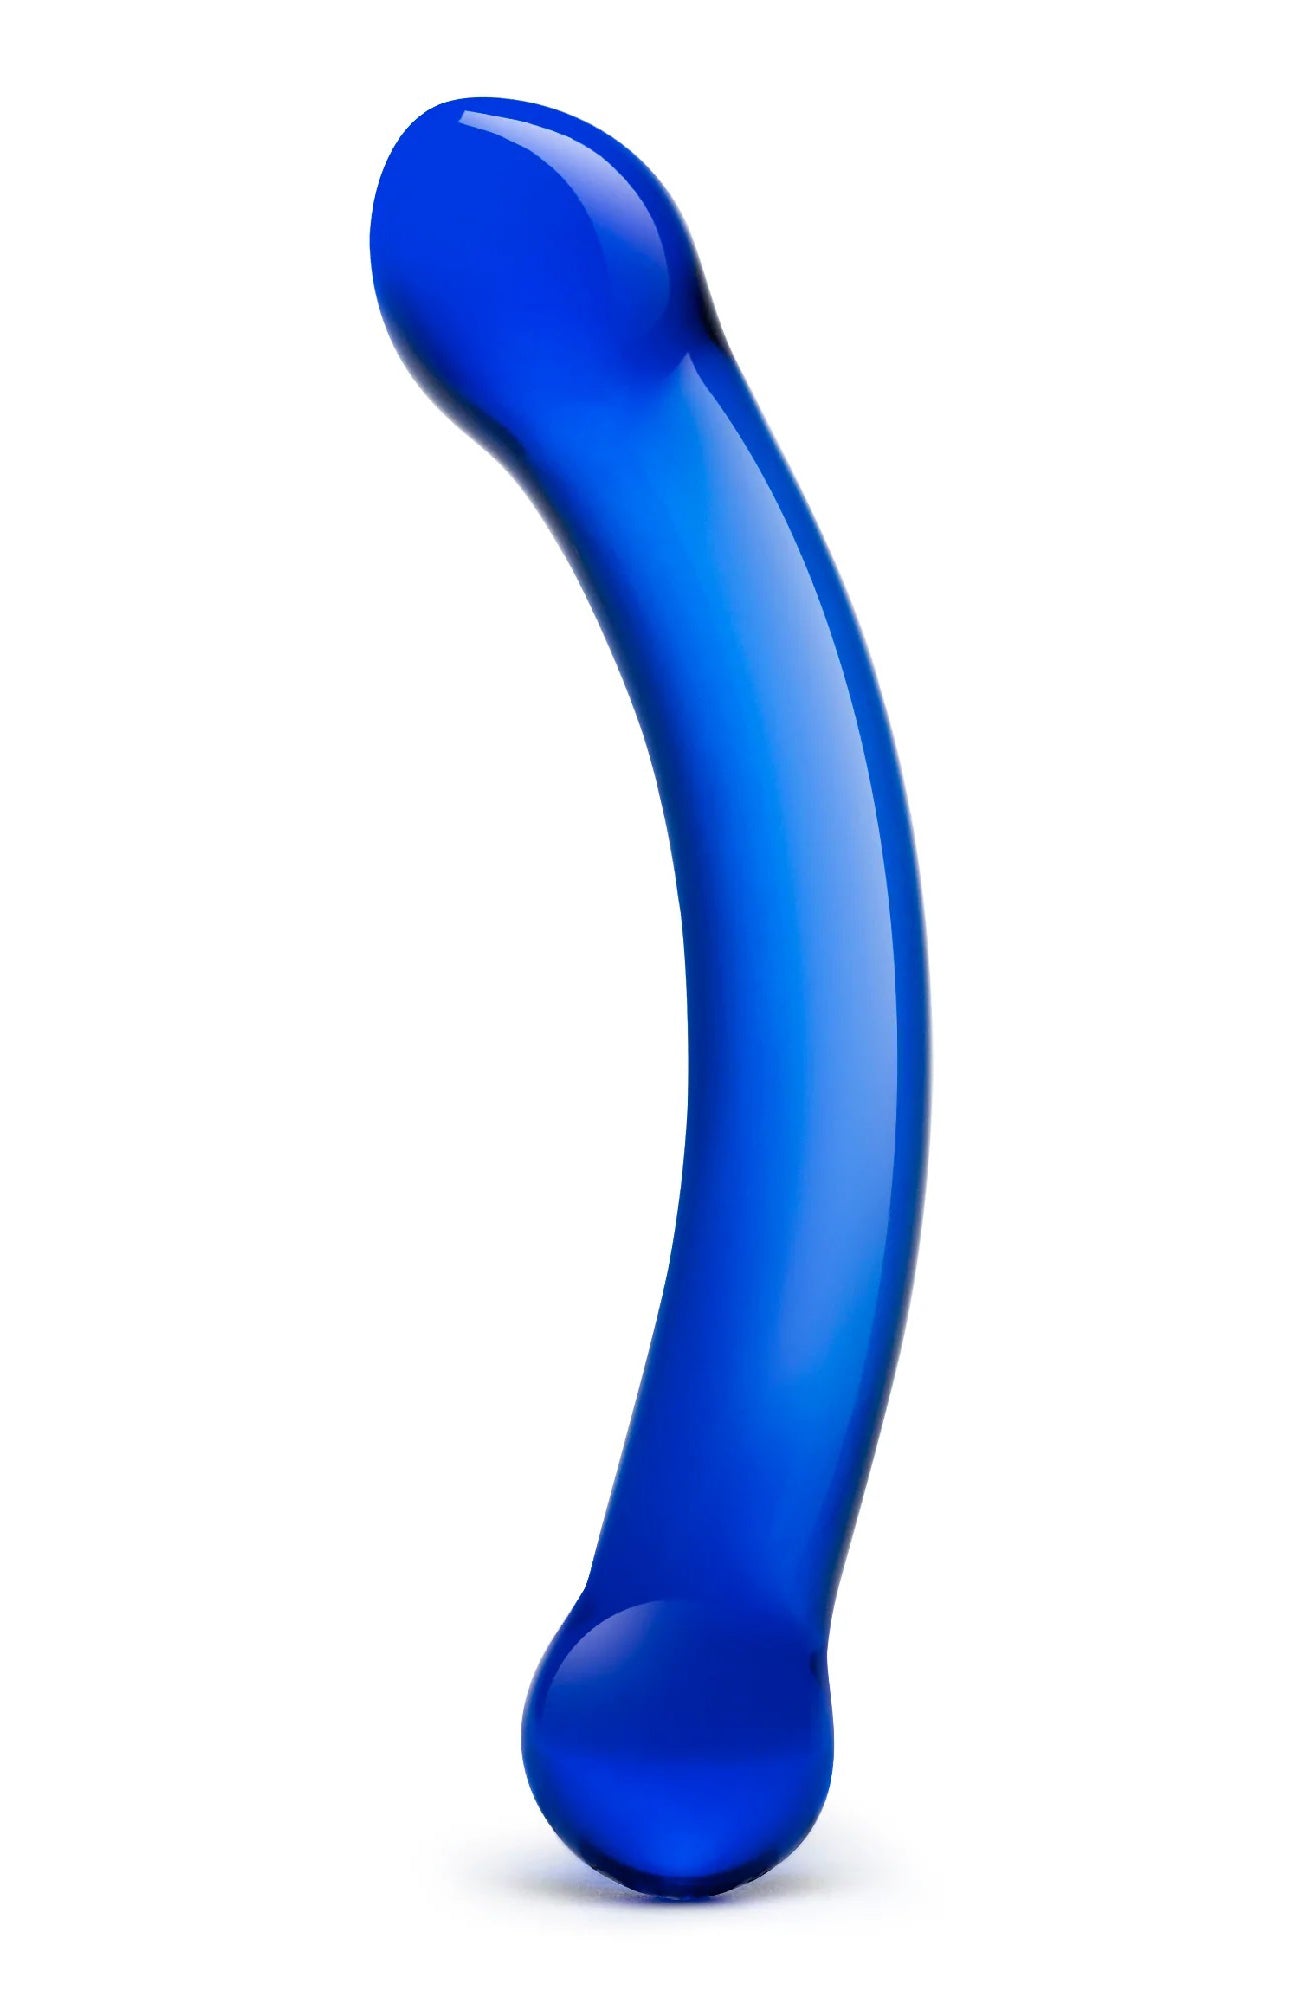 6 Inch Curved G-Spot Blue Glass Dildo